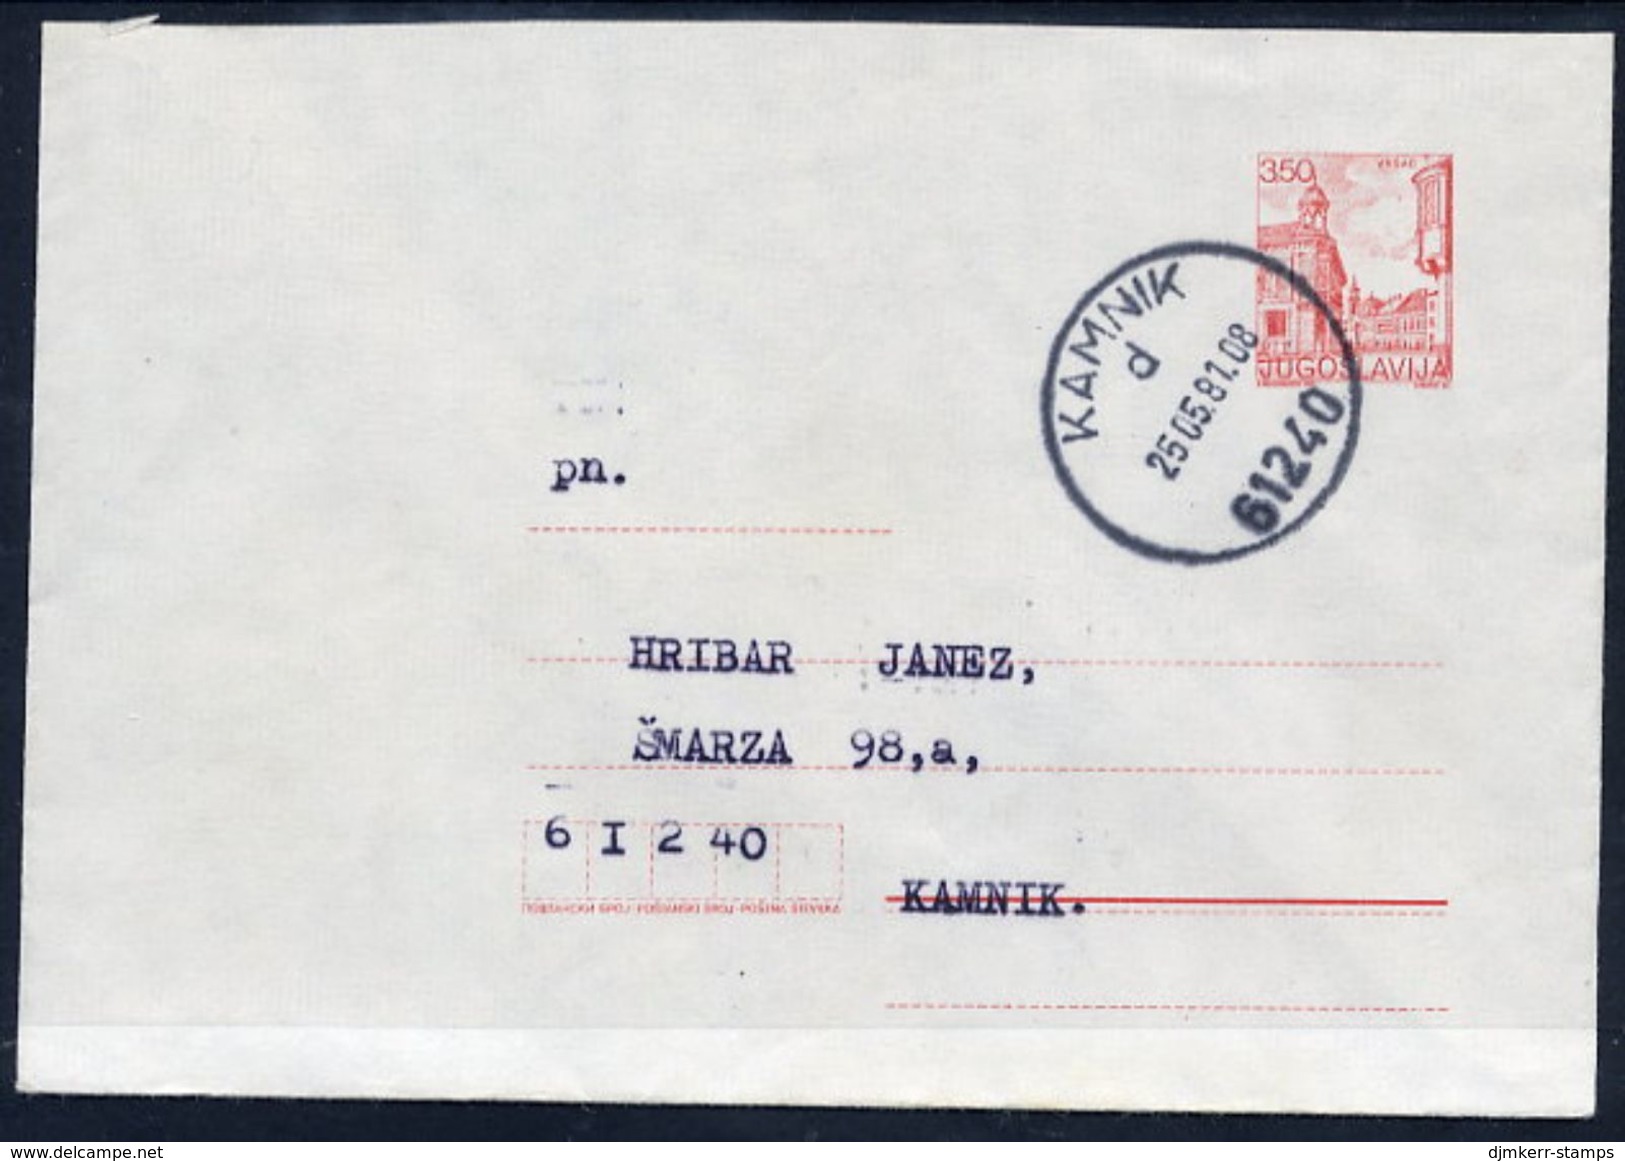 YUGOSLAVIA 1981 Tourism 3.50 D.stationery Envelope Used Without Additional Franking.  Michel U63 - Interi Postali